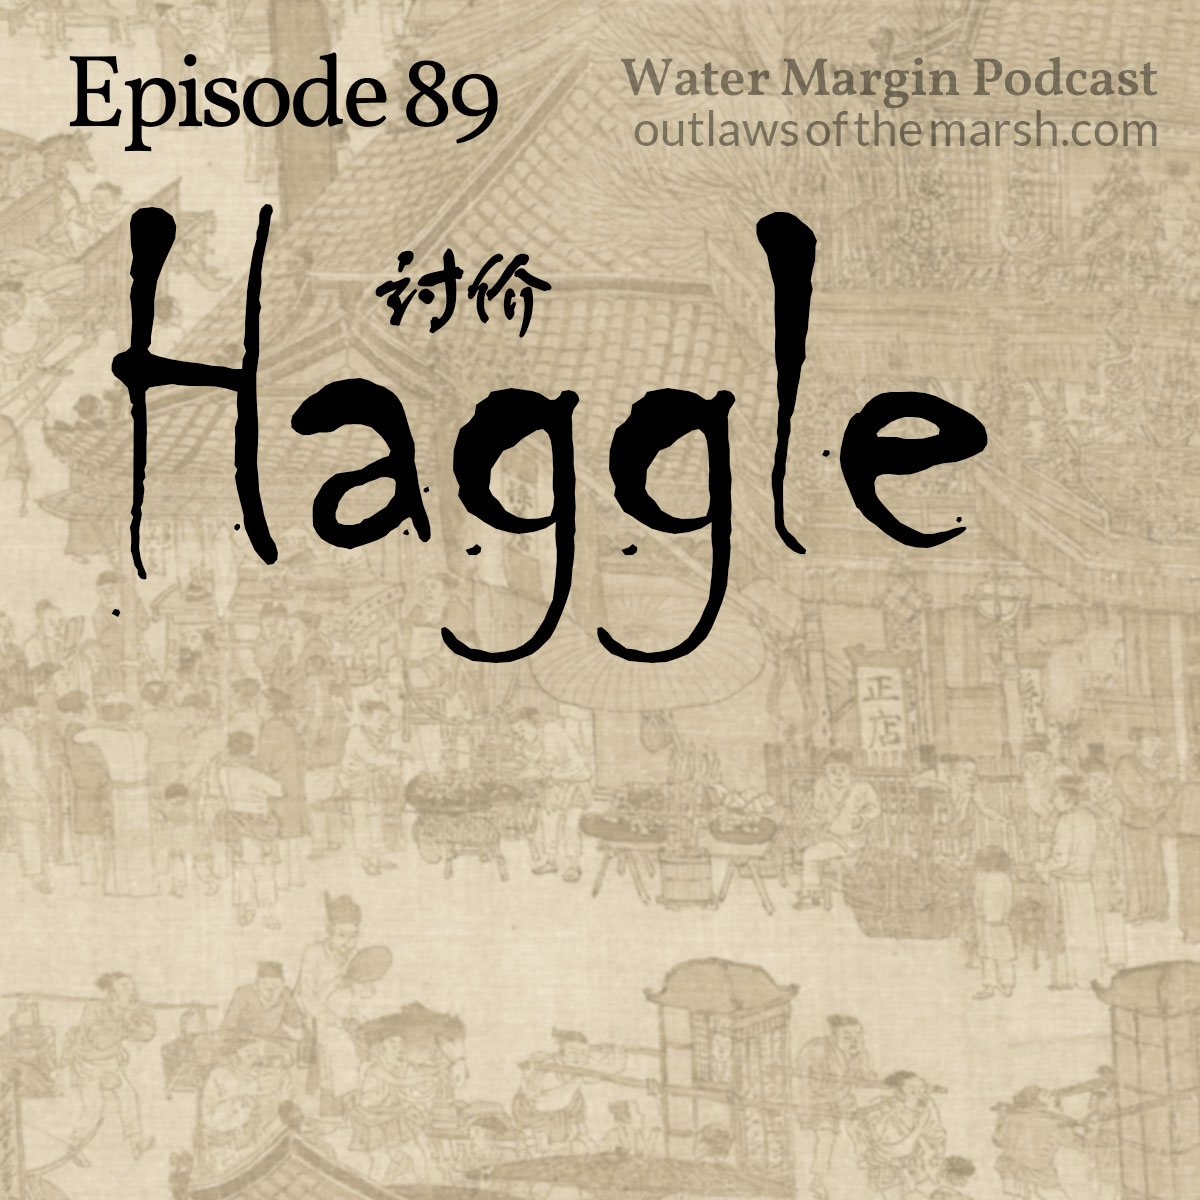 Water Margin Podcast: Episode 089